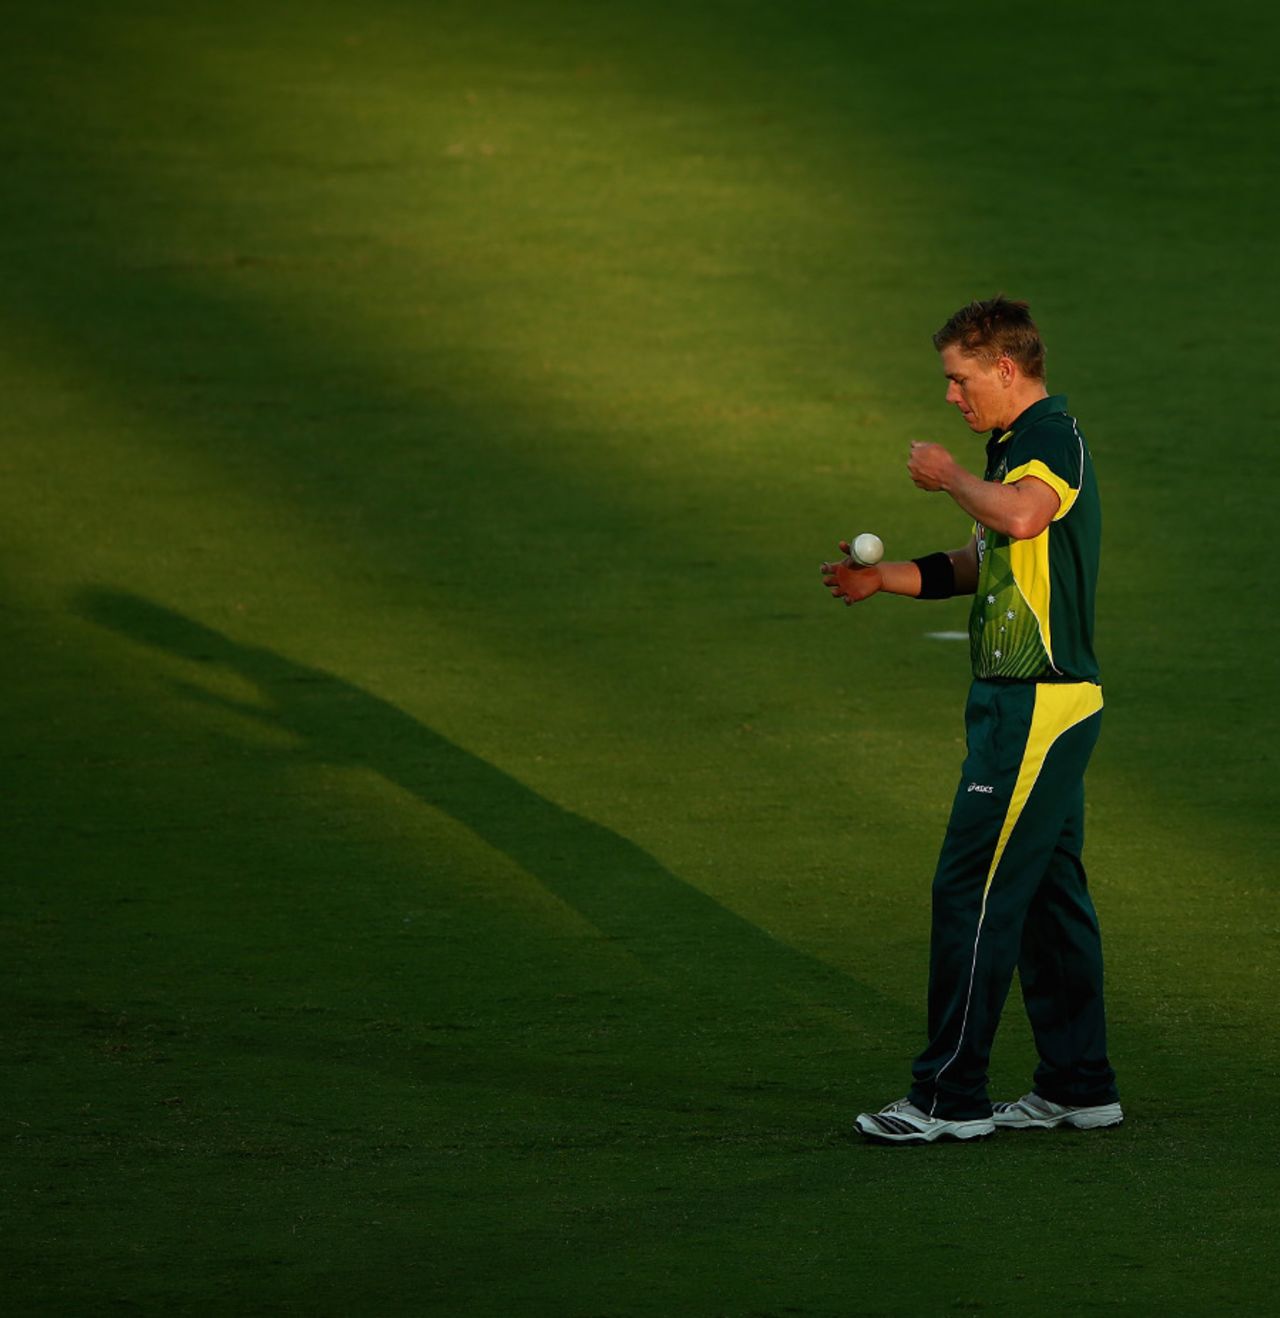 Xavier Doherty prepares to bowl as the shadows lengthen, Australia v England, 5th ODI, Adelaide, January 26, 2014